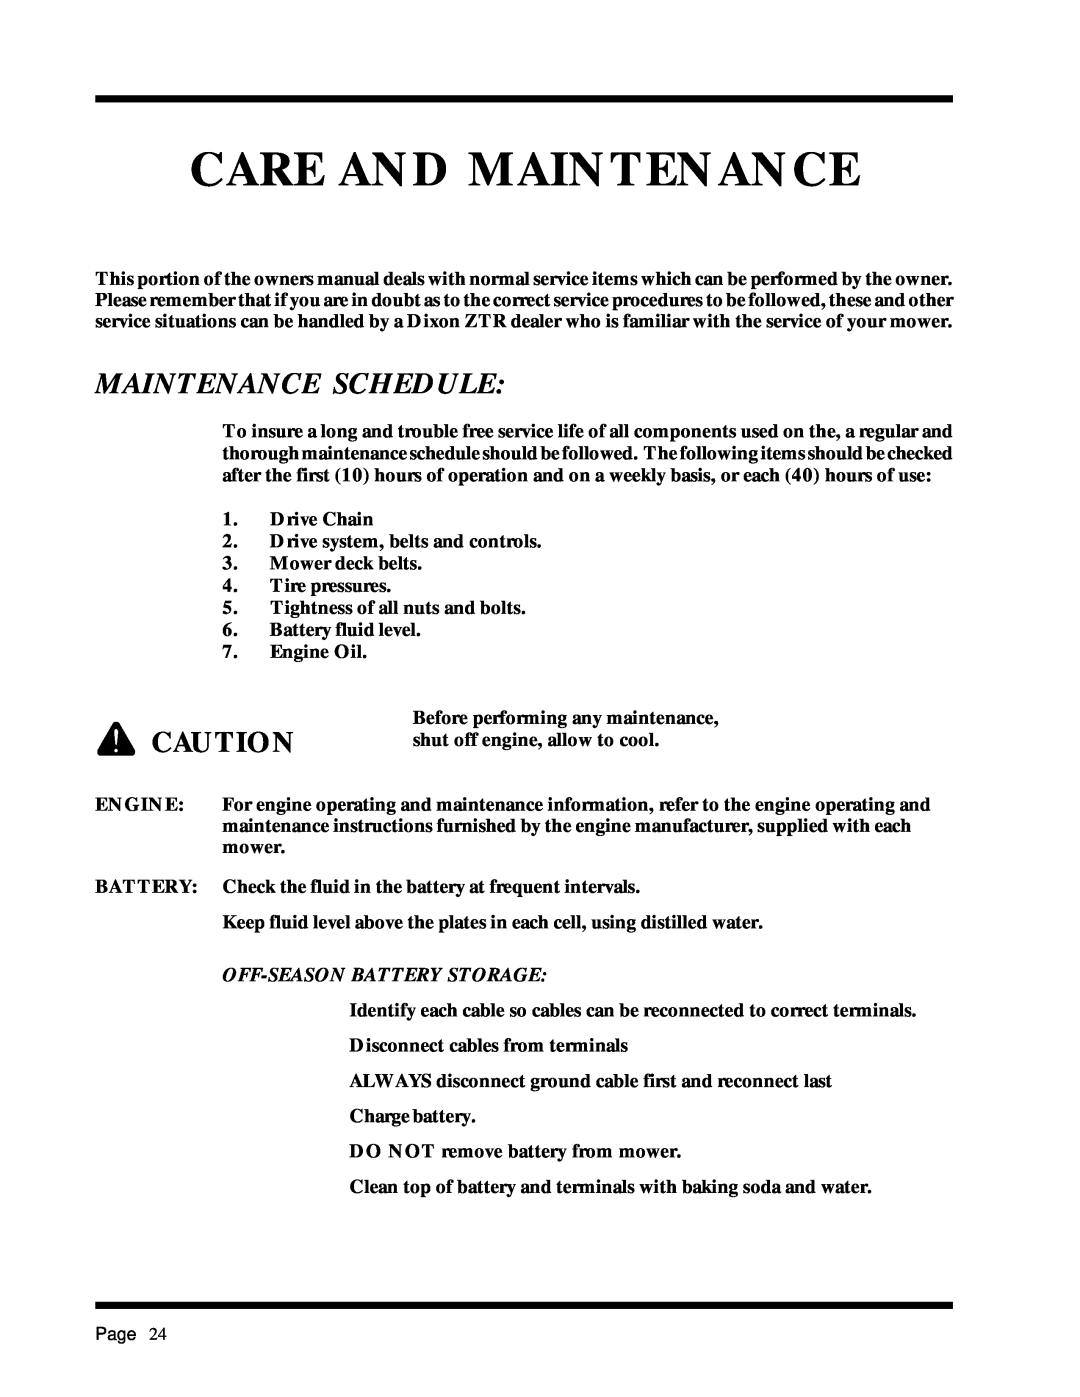 Dixon 6025 manual Care And Maintenance, Maintenance Schedule 